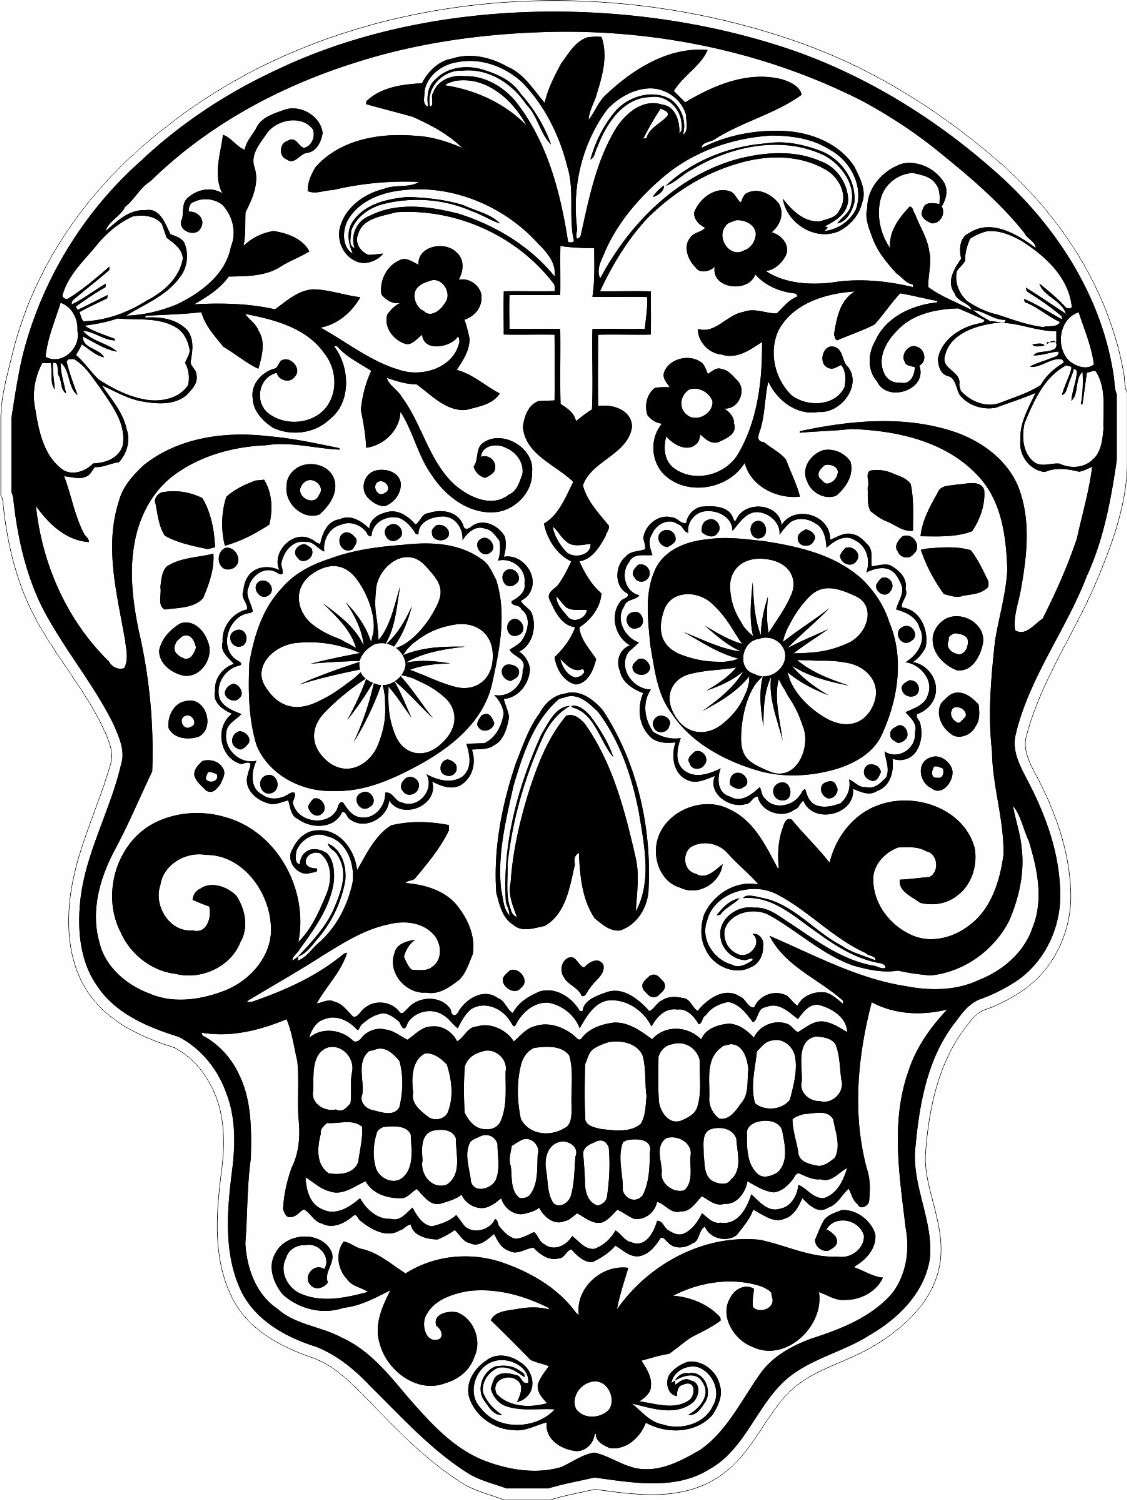 Printable Sugar Skull Coloring Pages
 Sugar Skull Coloring Pages coloringsuite